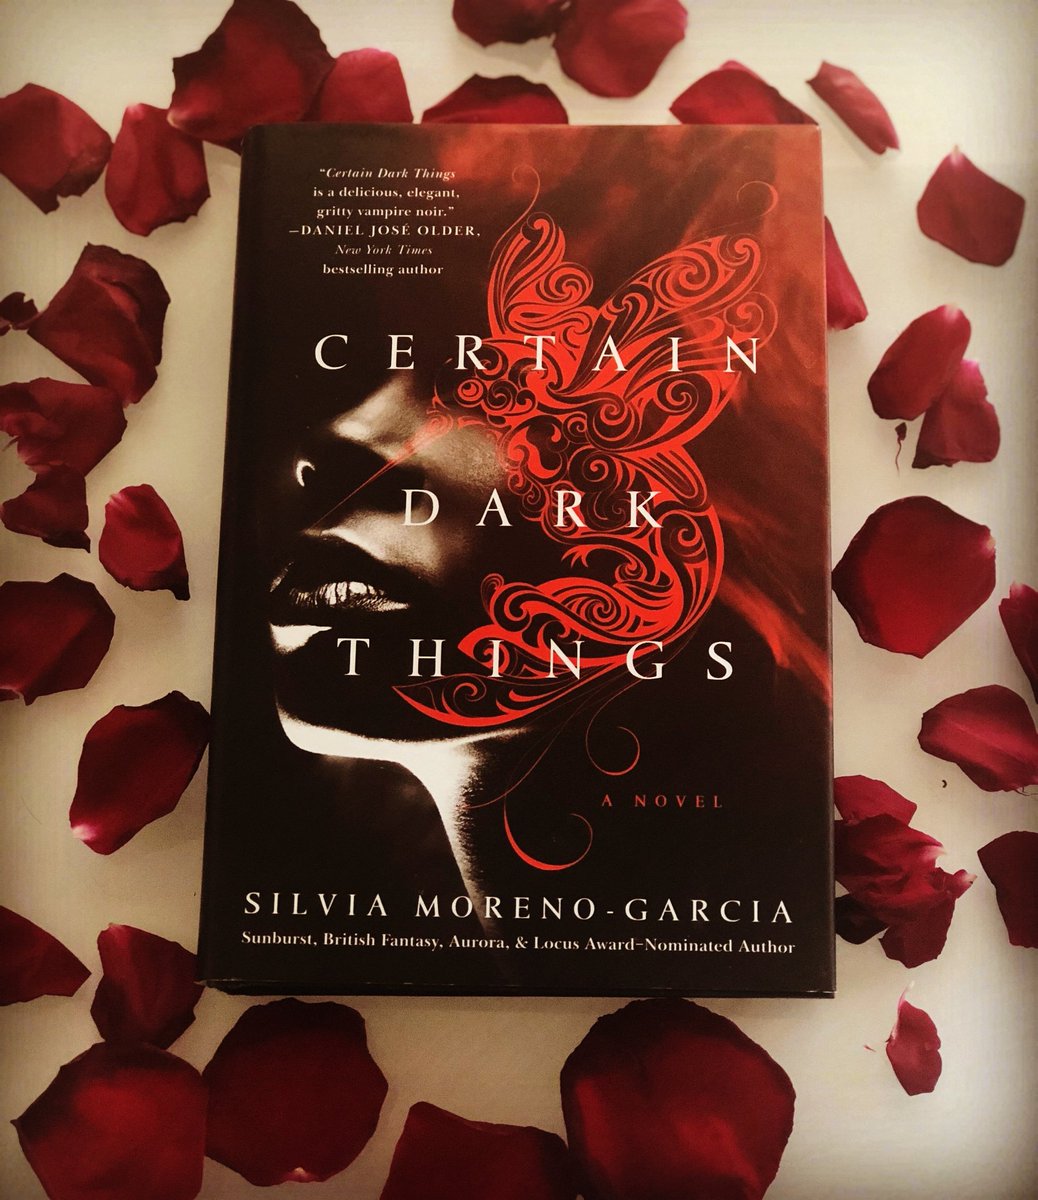 Certainly dark...
#bookstagram #certaindarkthings #Silviamorenogarcia 
instagram.com/p/B87KhfEApF_/…